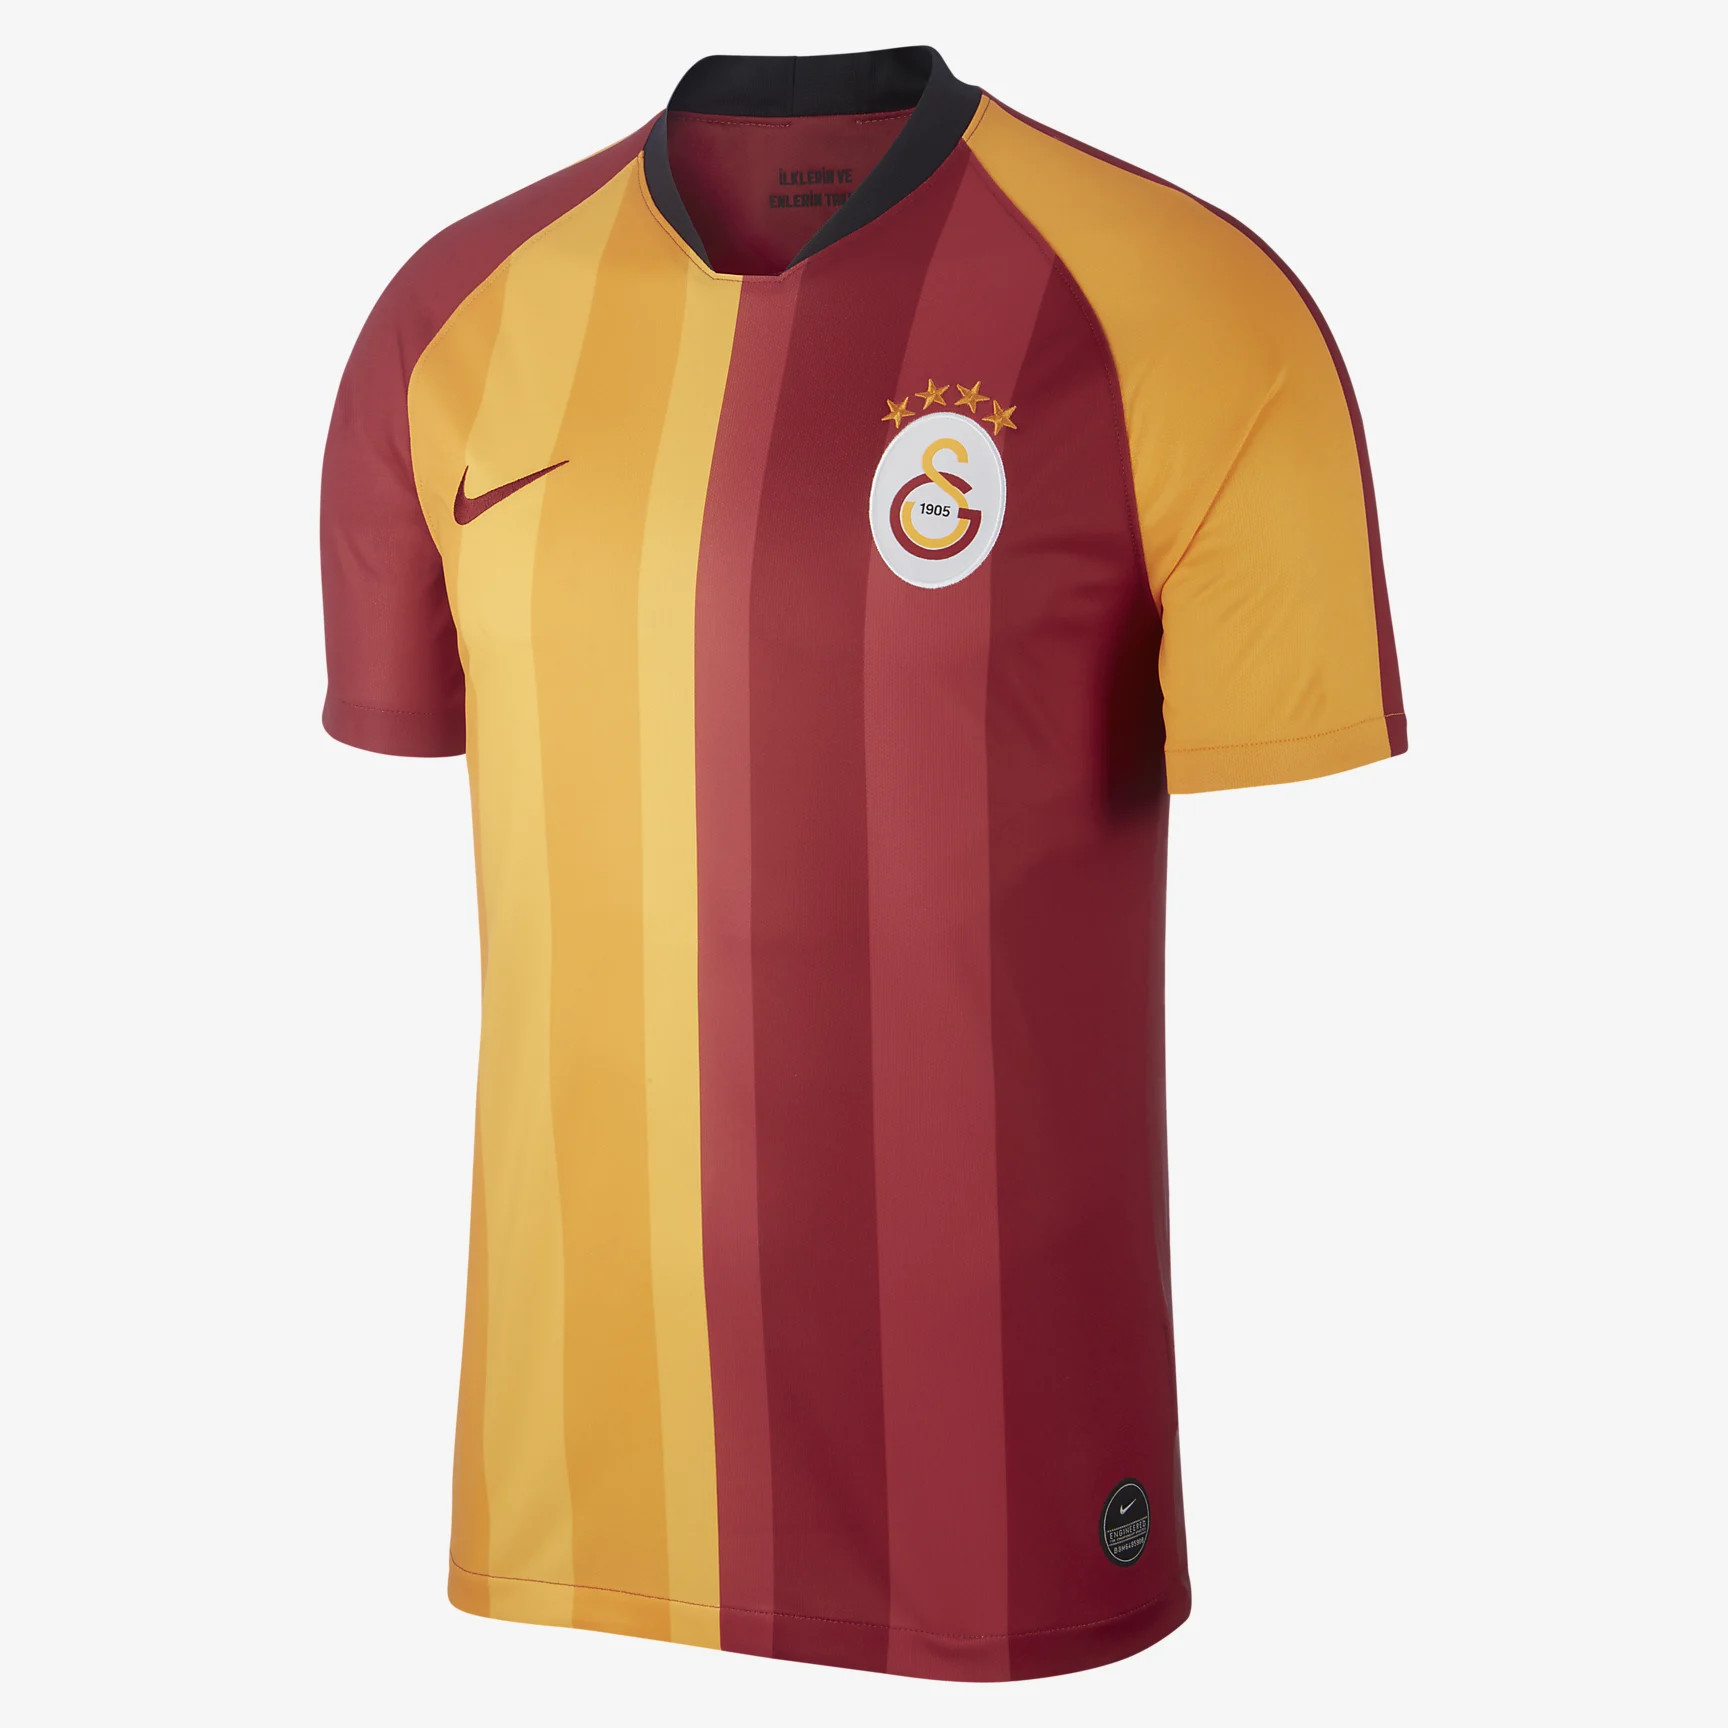 Galatasaray maillot football femme - Maillots-Football.com